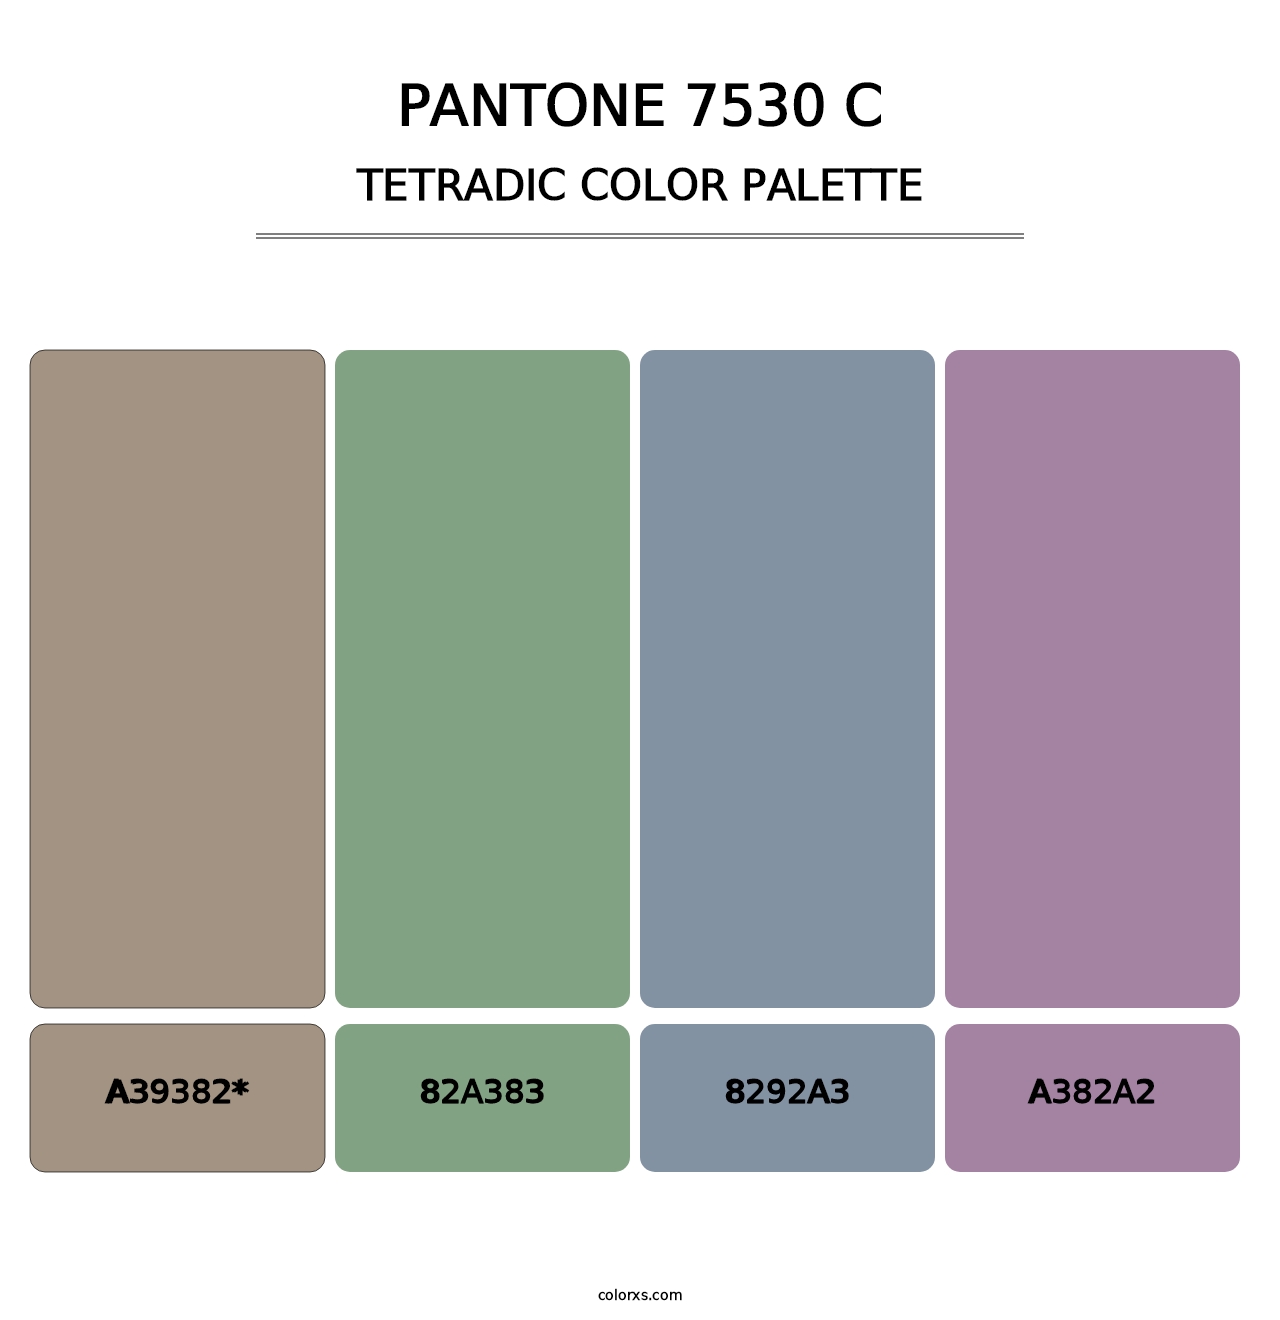 PANTONE 7530 C - Tetradic Color Palette